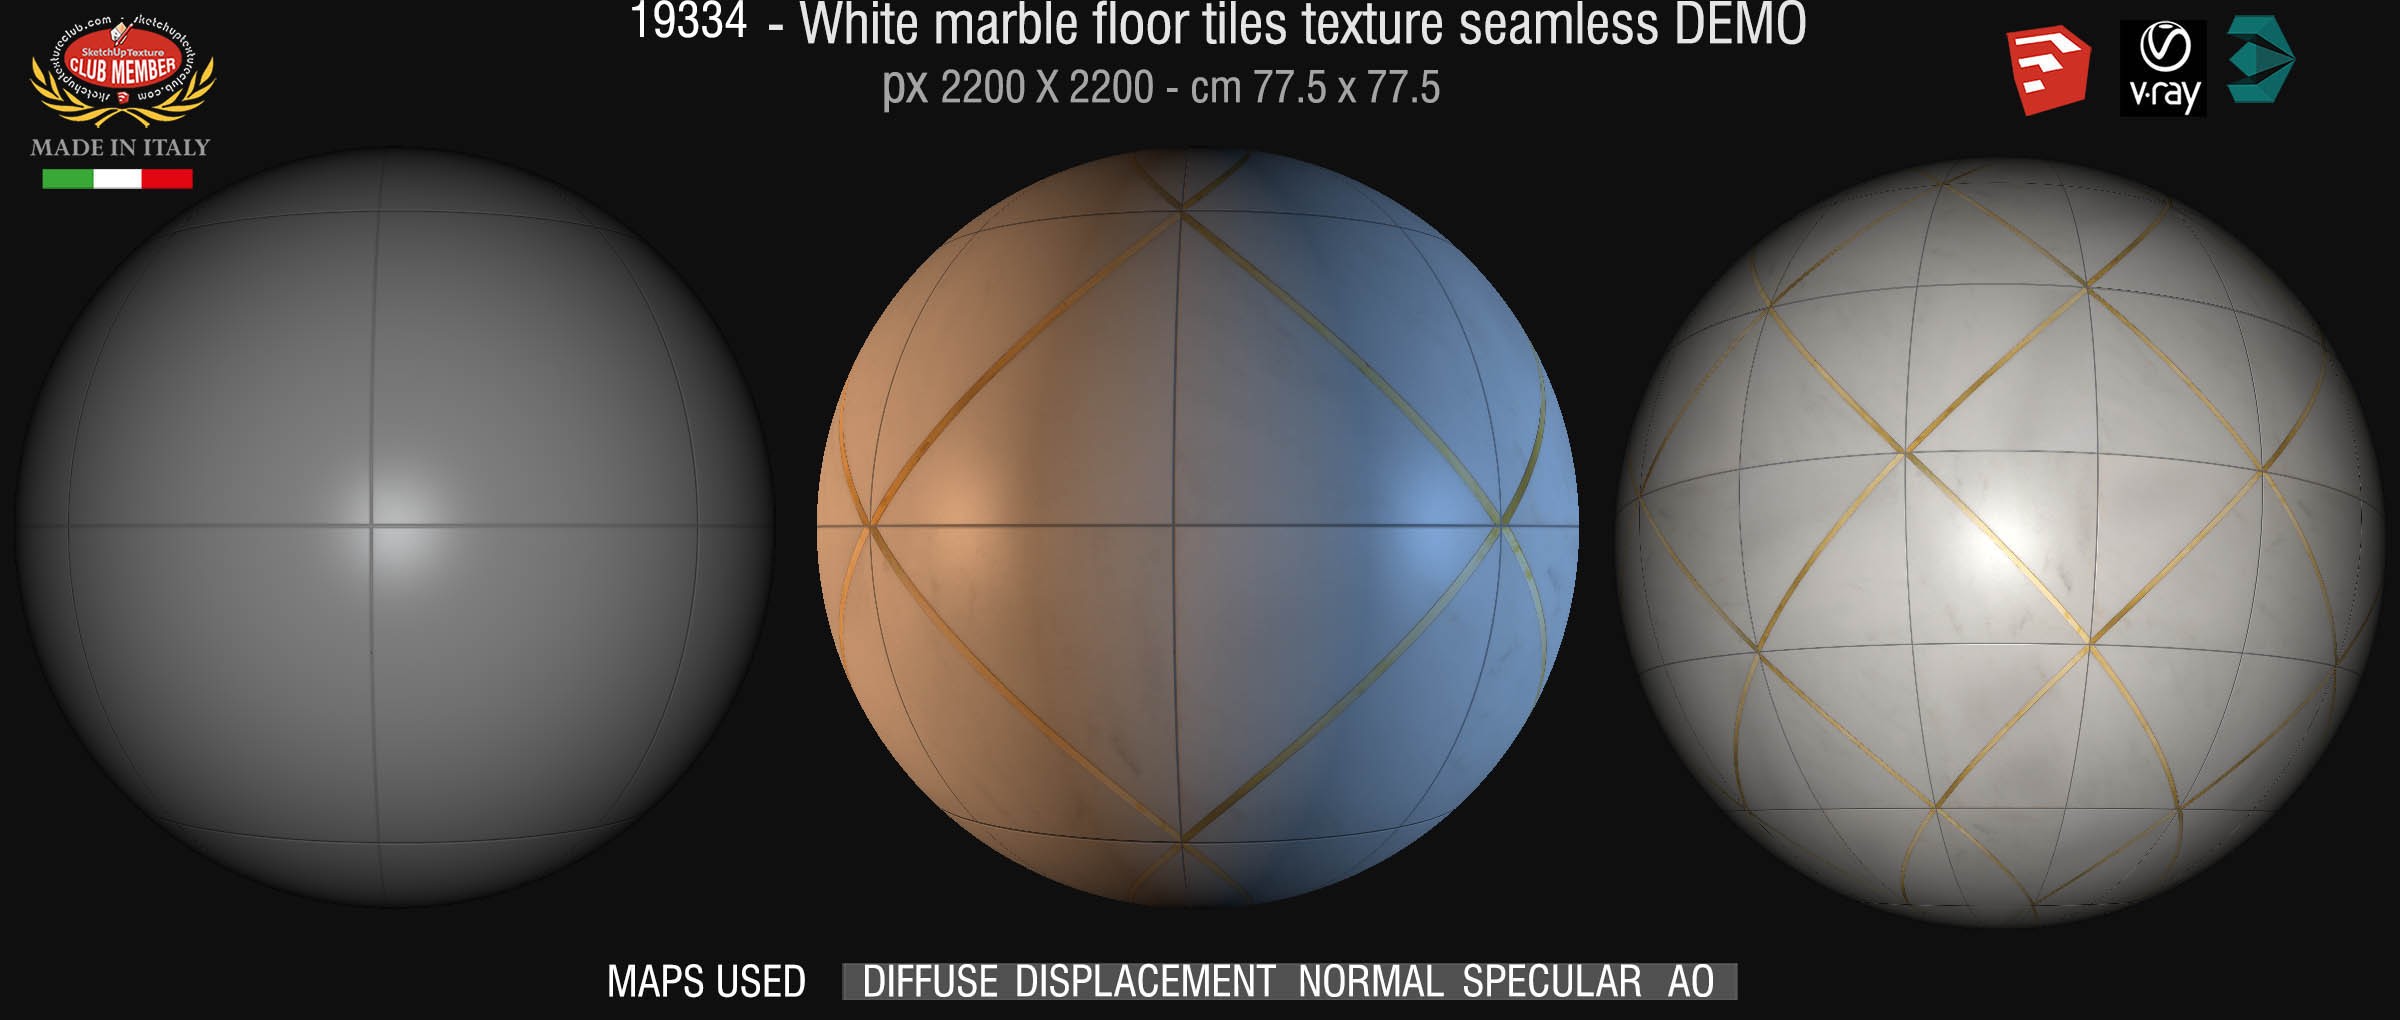 19334 Geometric pattern white marble floor tile texture seamless + maps DEMO